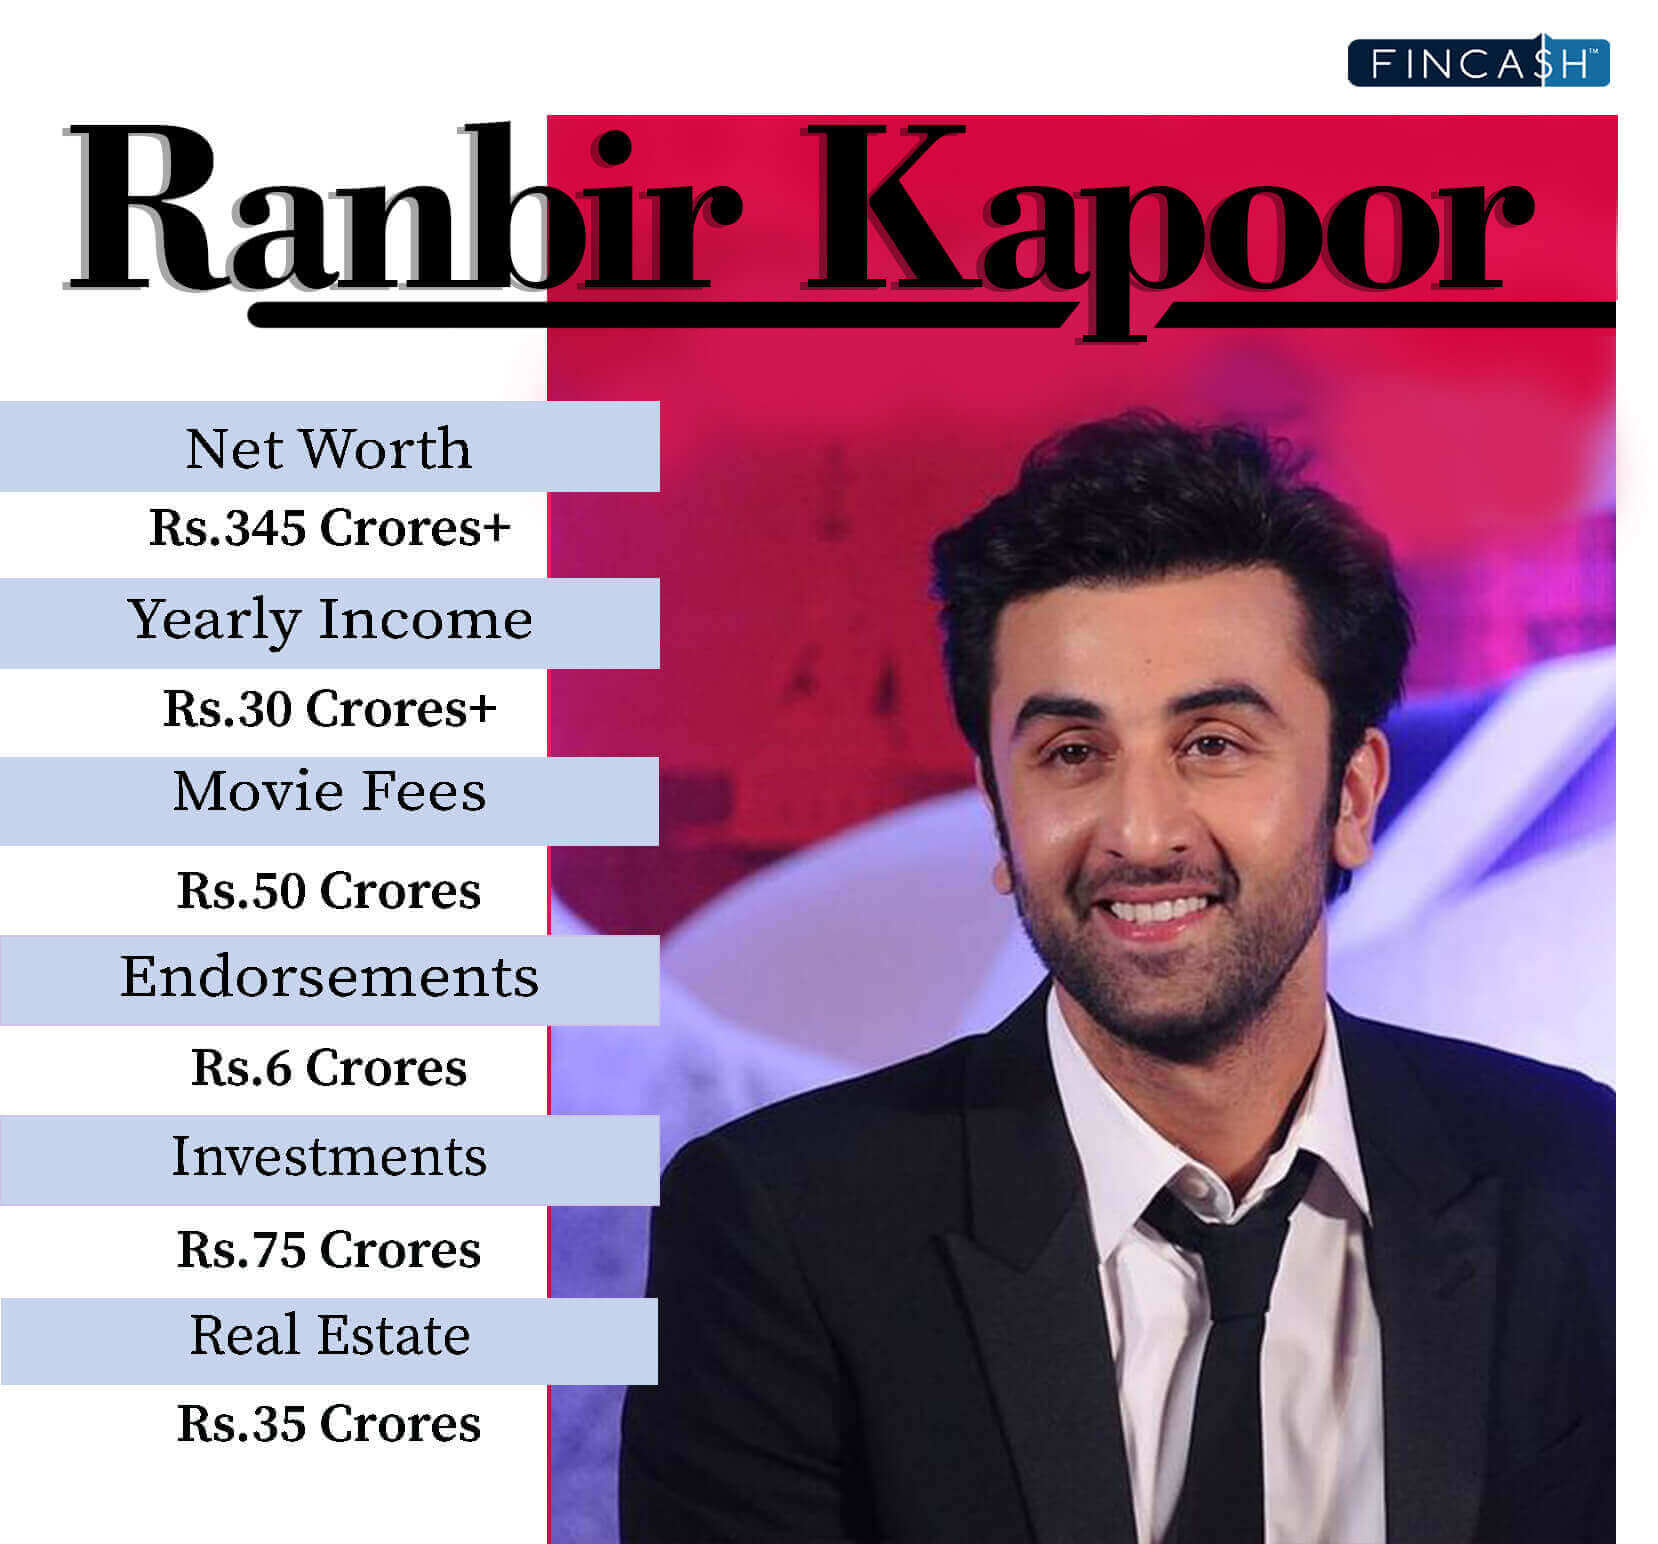 Ranbir Kapoor Net Worth Rs. 345 Crores+ | Fincash